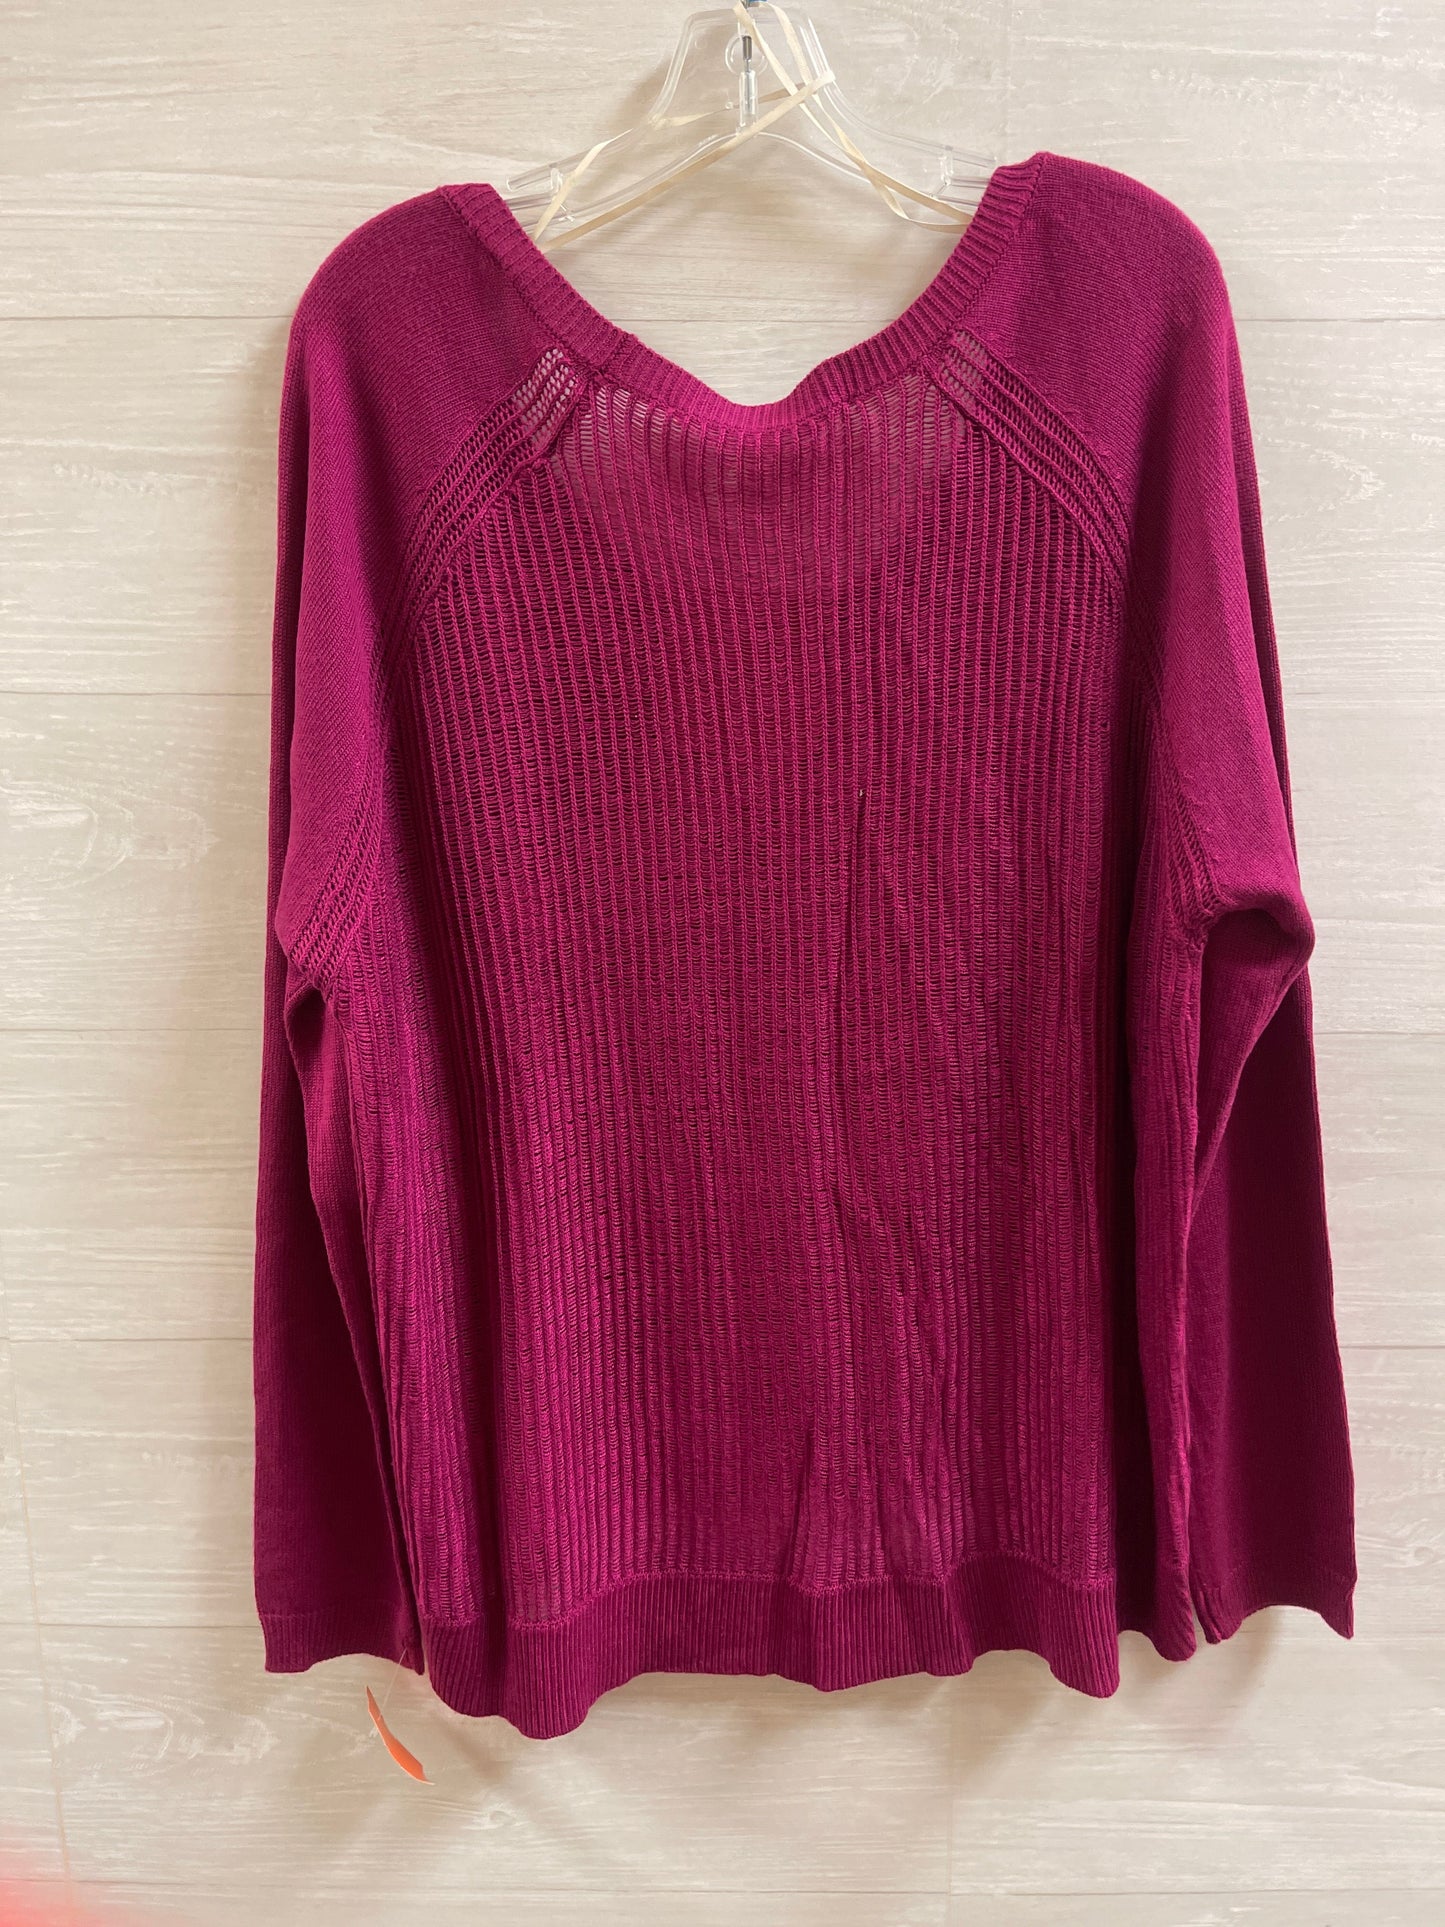 Sweater By Rachel Roy  Size: 2x